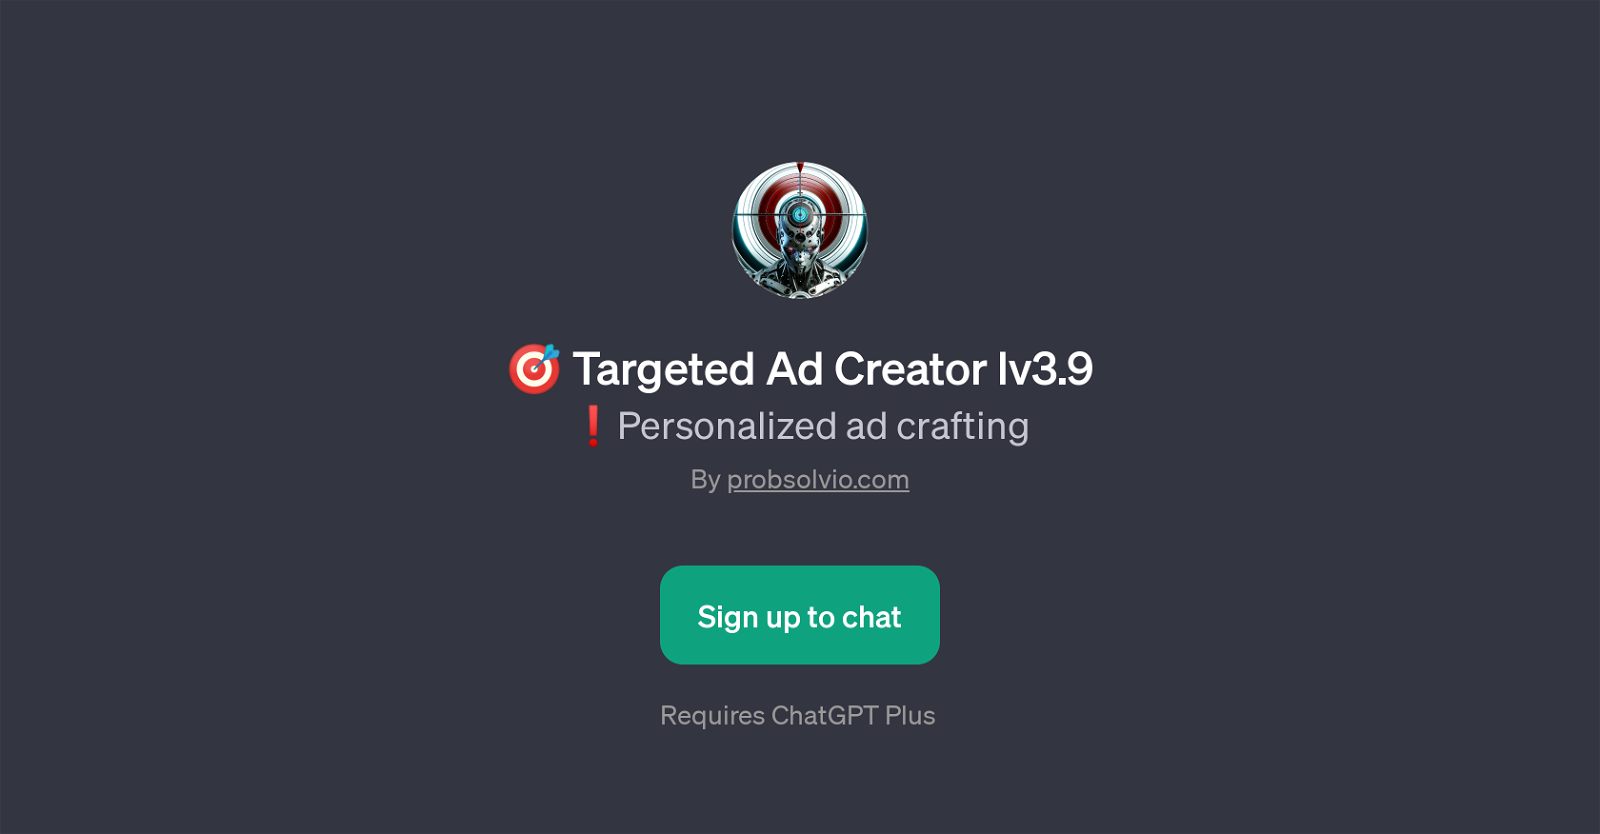 Targeted Ad Creator lv3.9 website